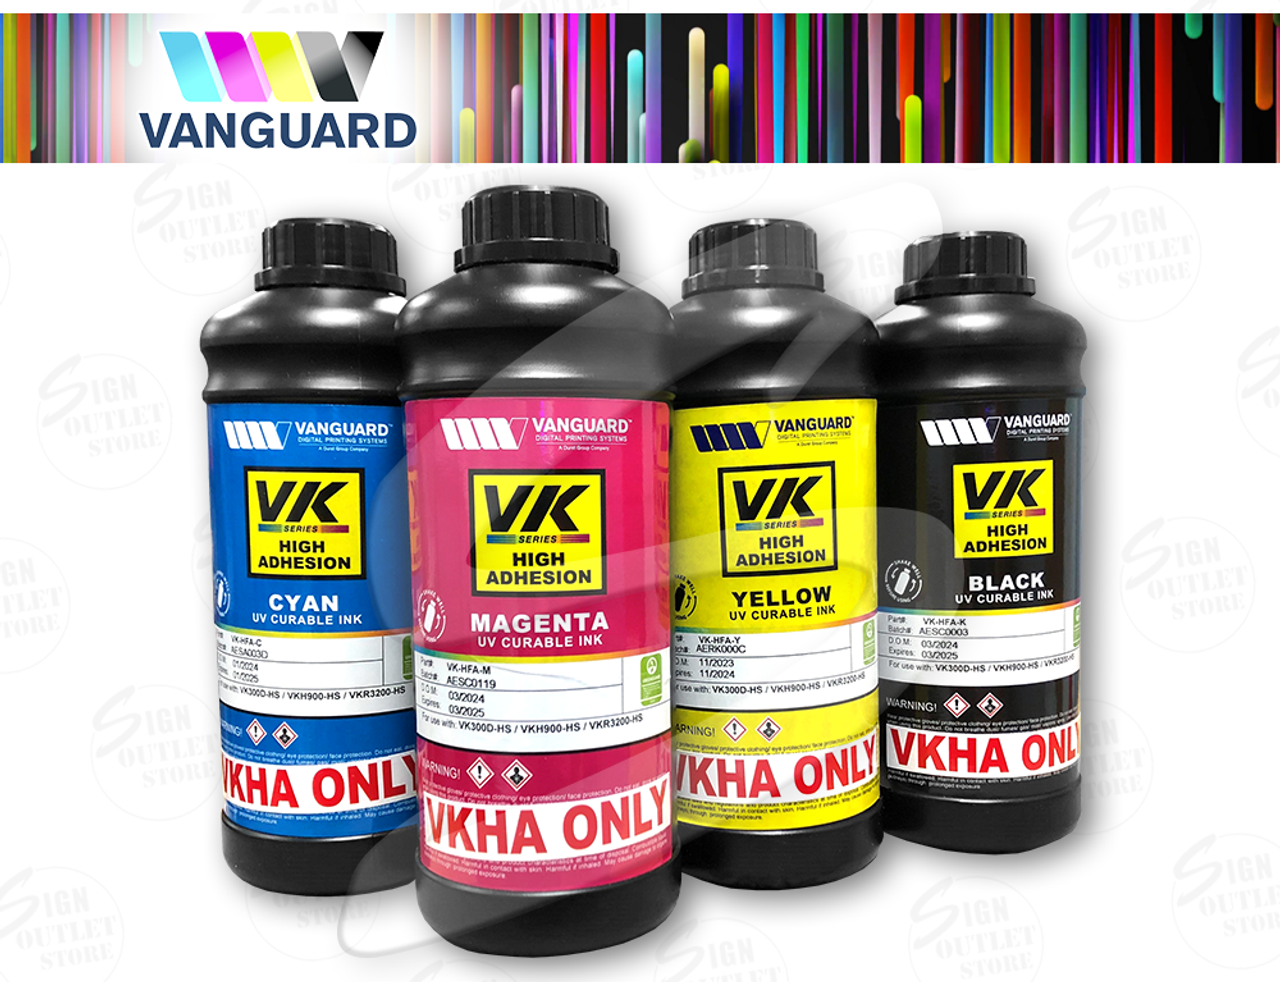 Vanguard VK High Adhesion UV Inks